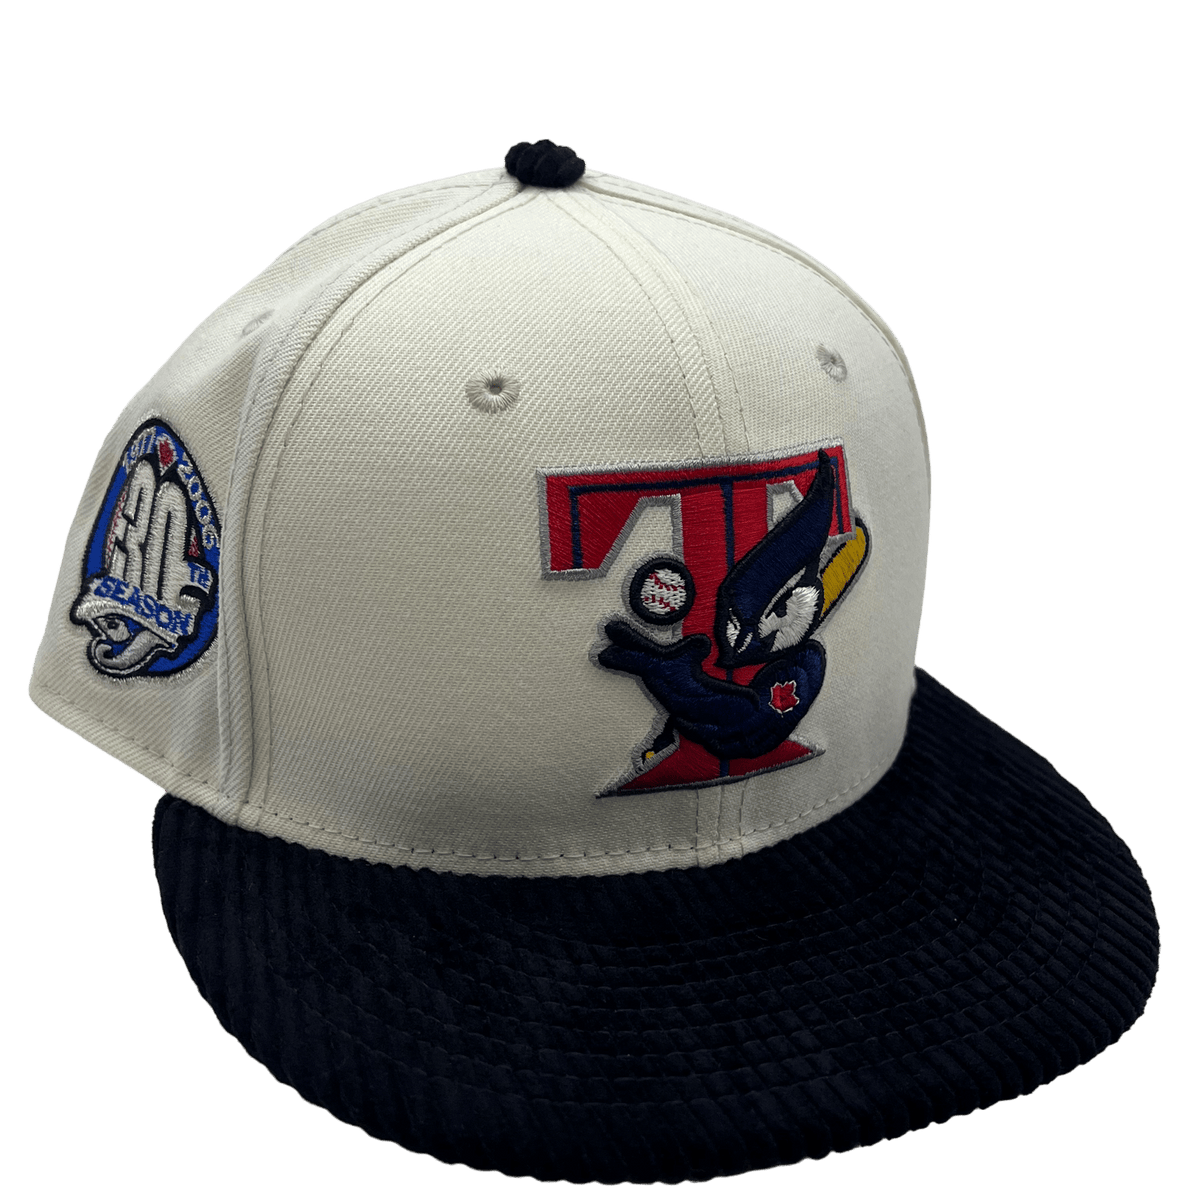 Blue Jays Flatbill Baseball Hat OCMLB400 - Size Quantity